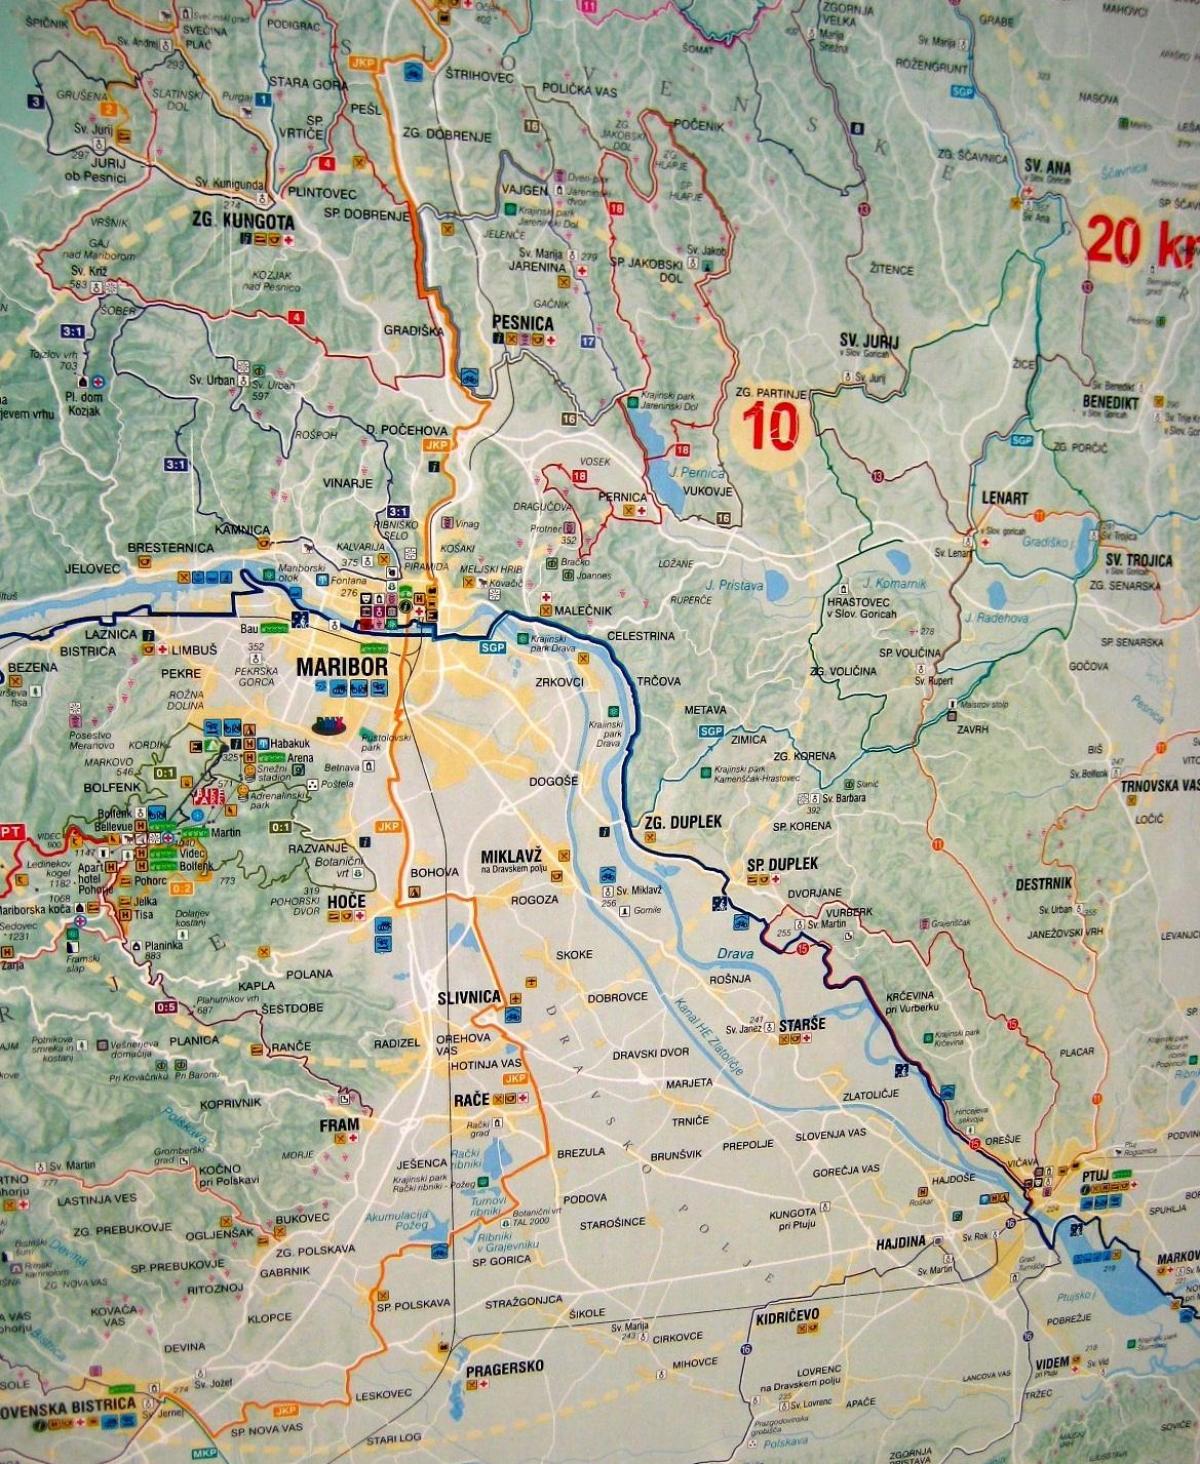 Kamp Slovenya haritası 